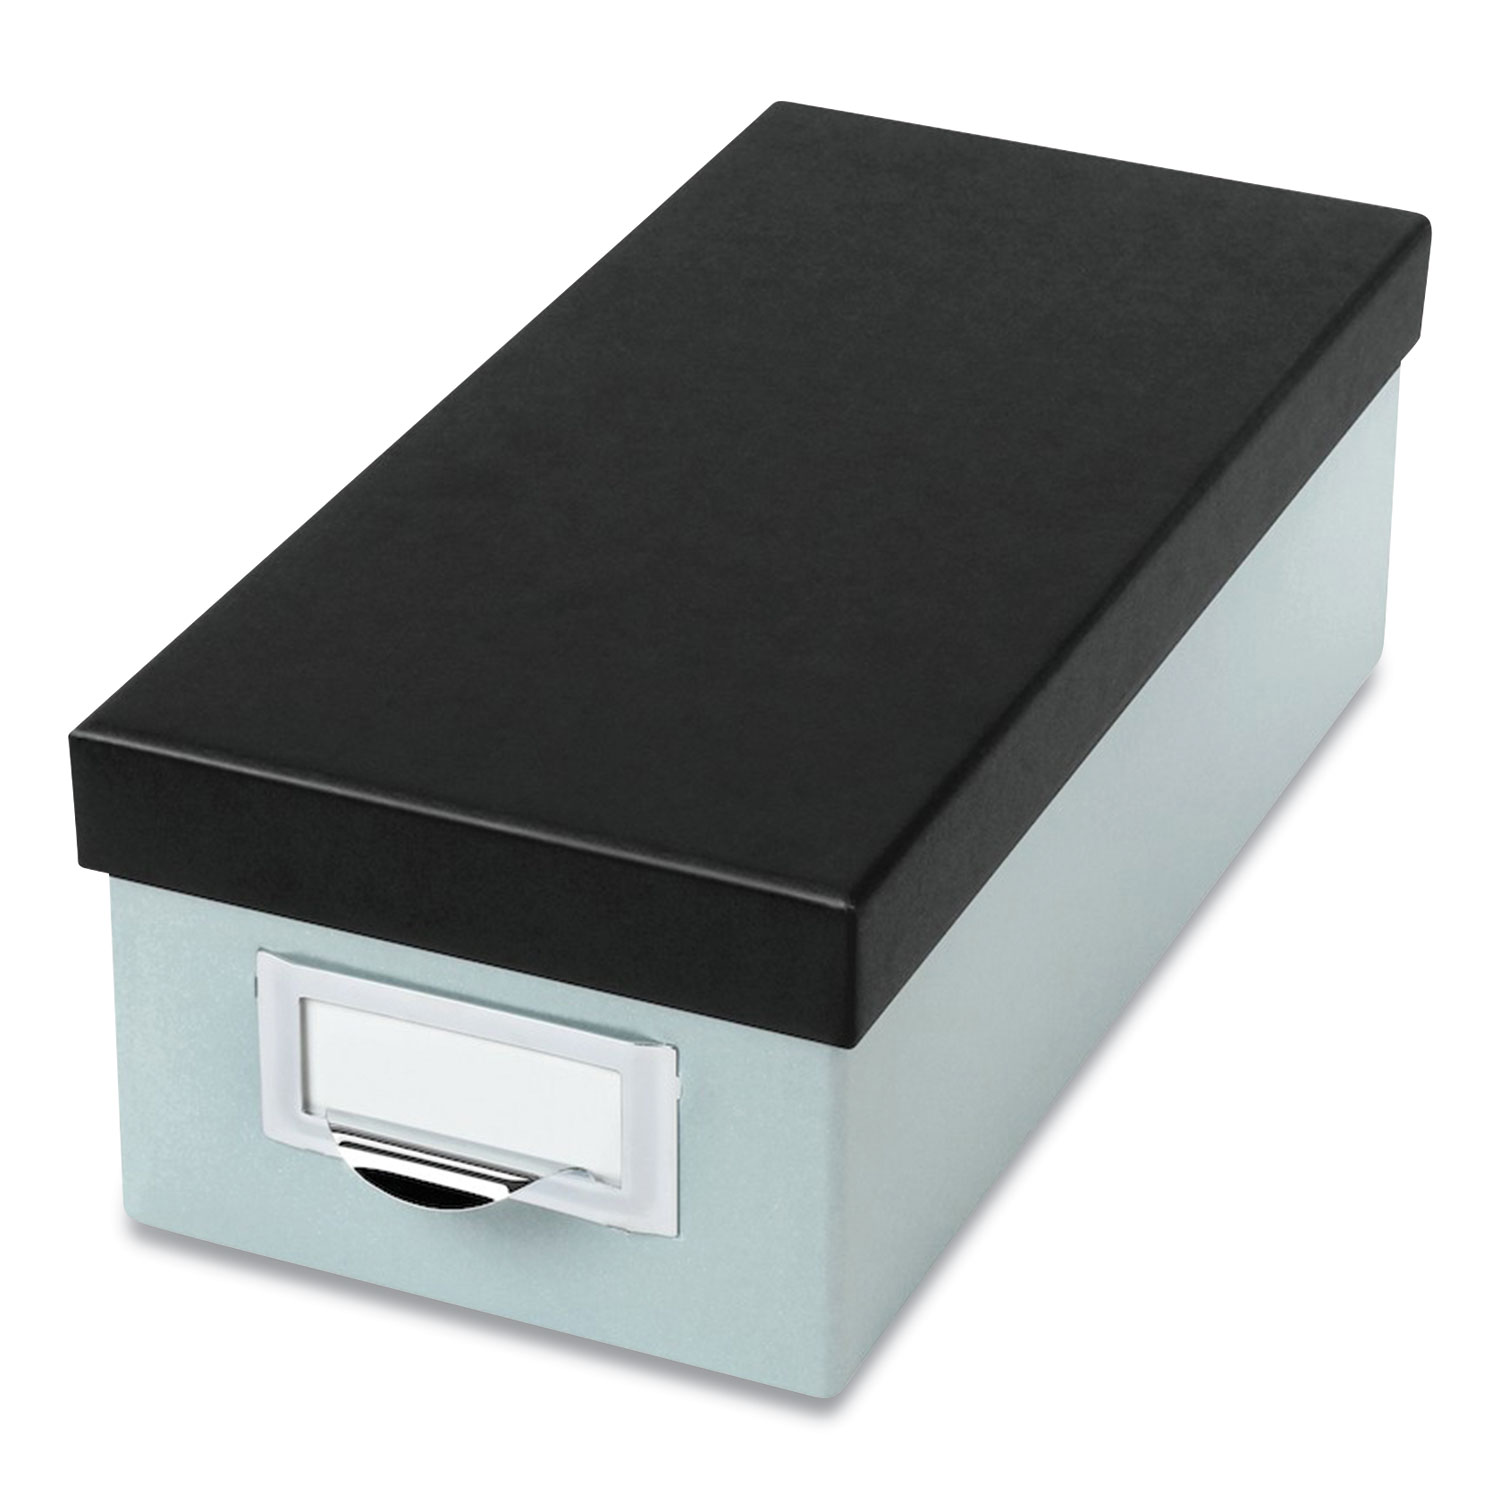 Oxford™ Index Card Storage Box, Holds 1,000 3 x 5 Cards, Pressboard, Blue Fog/Black, 5.5 x 11.5 x 3.88